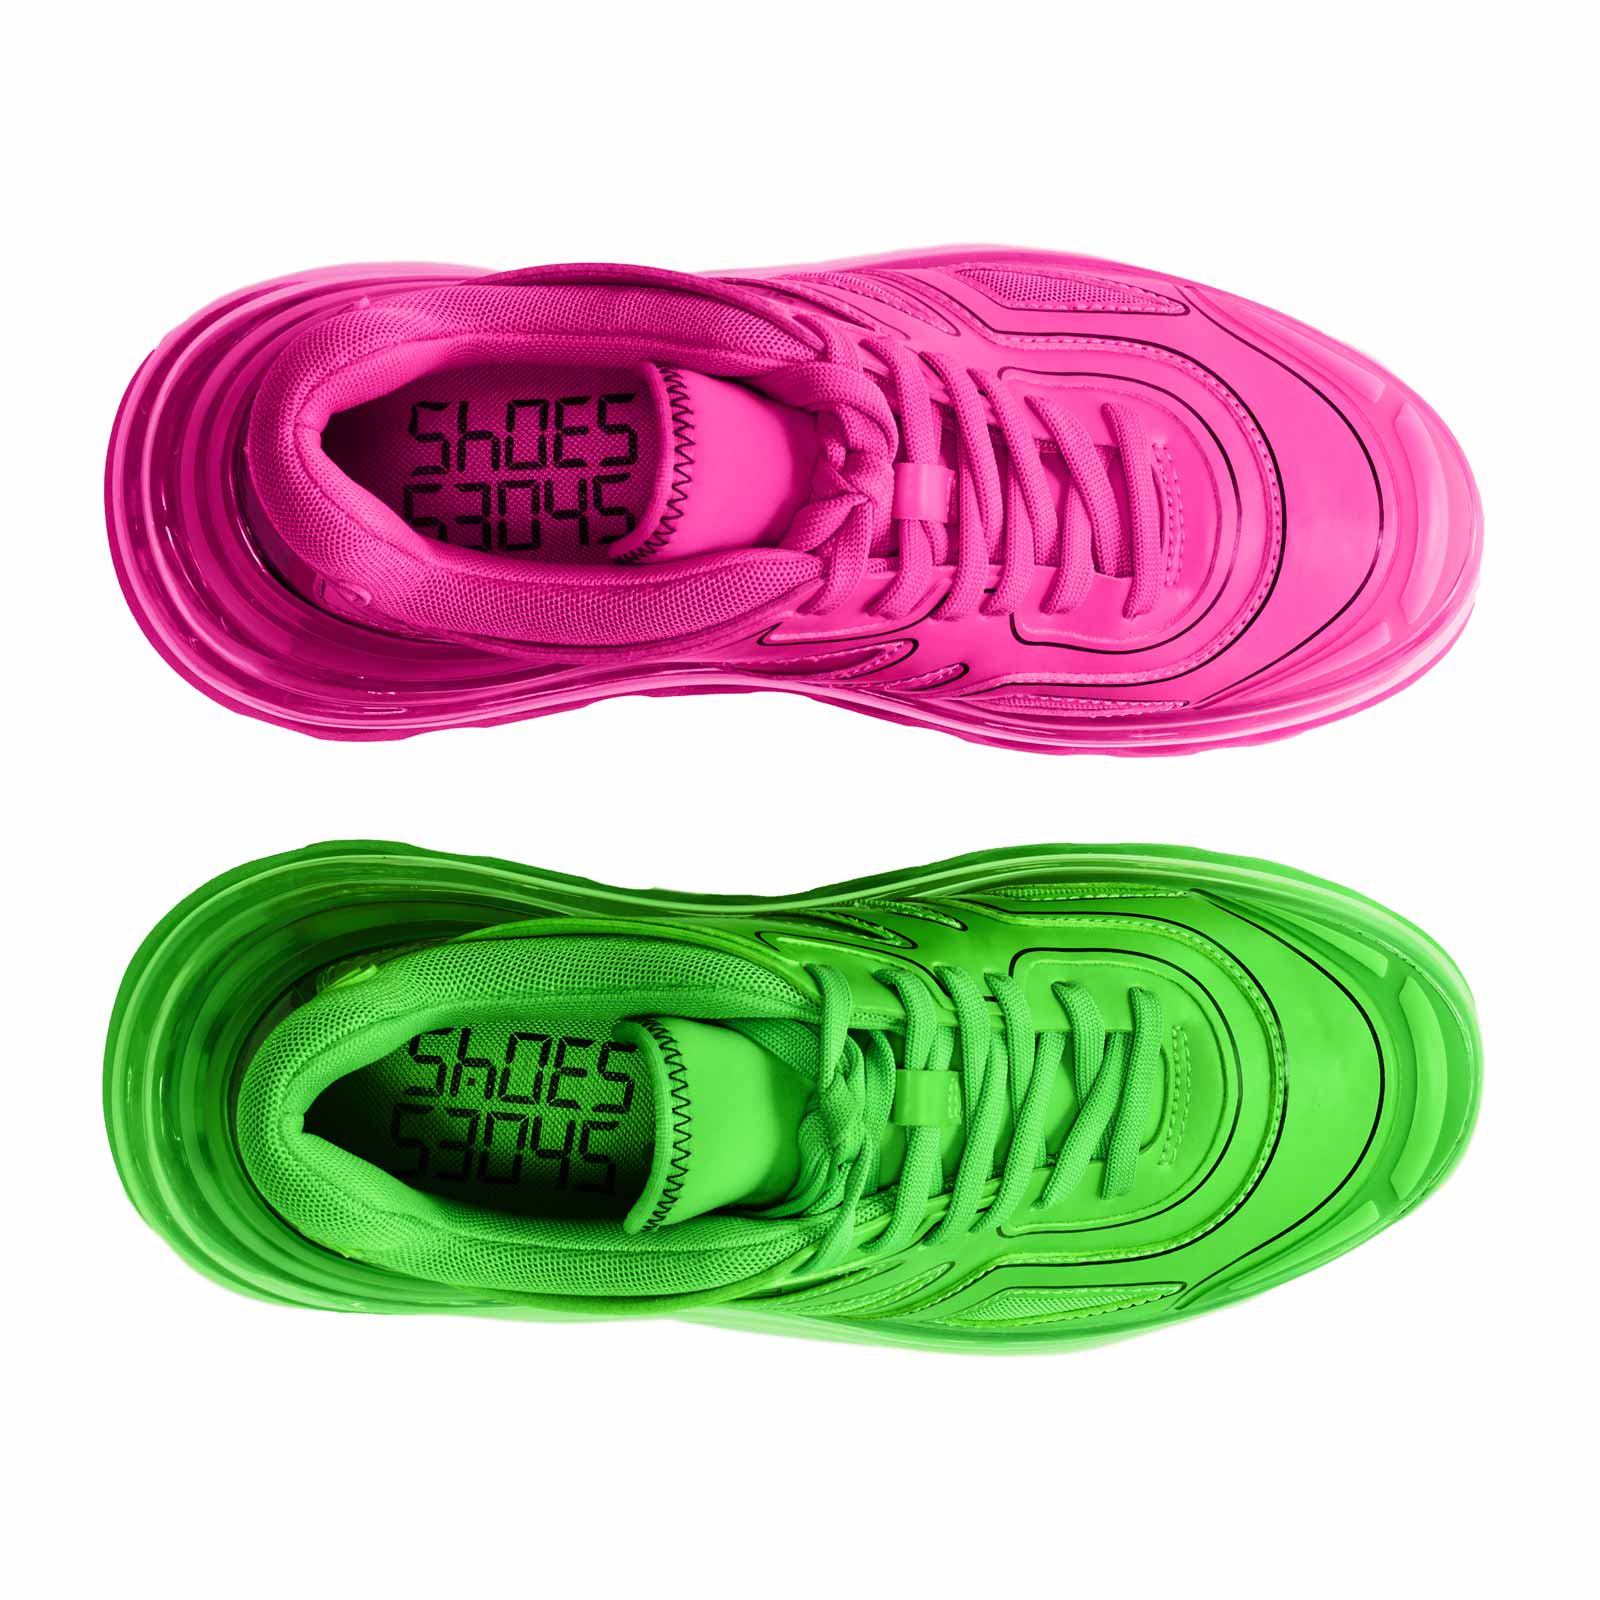 sneakers neon pink